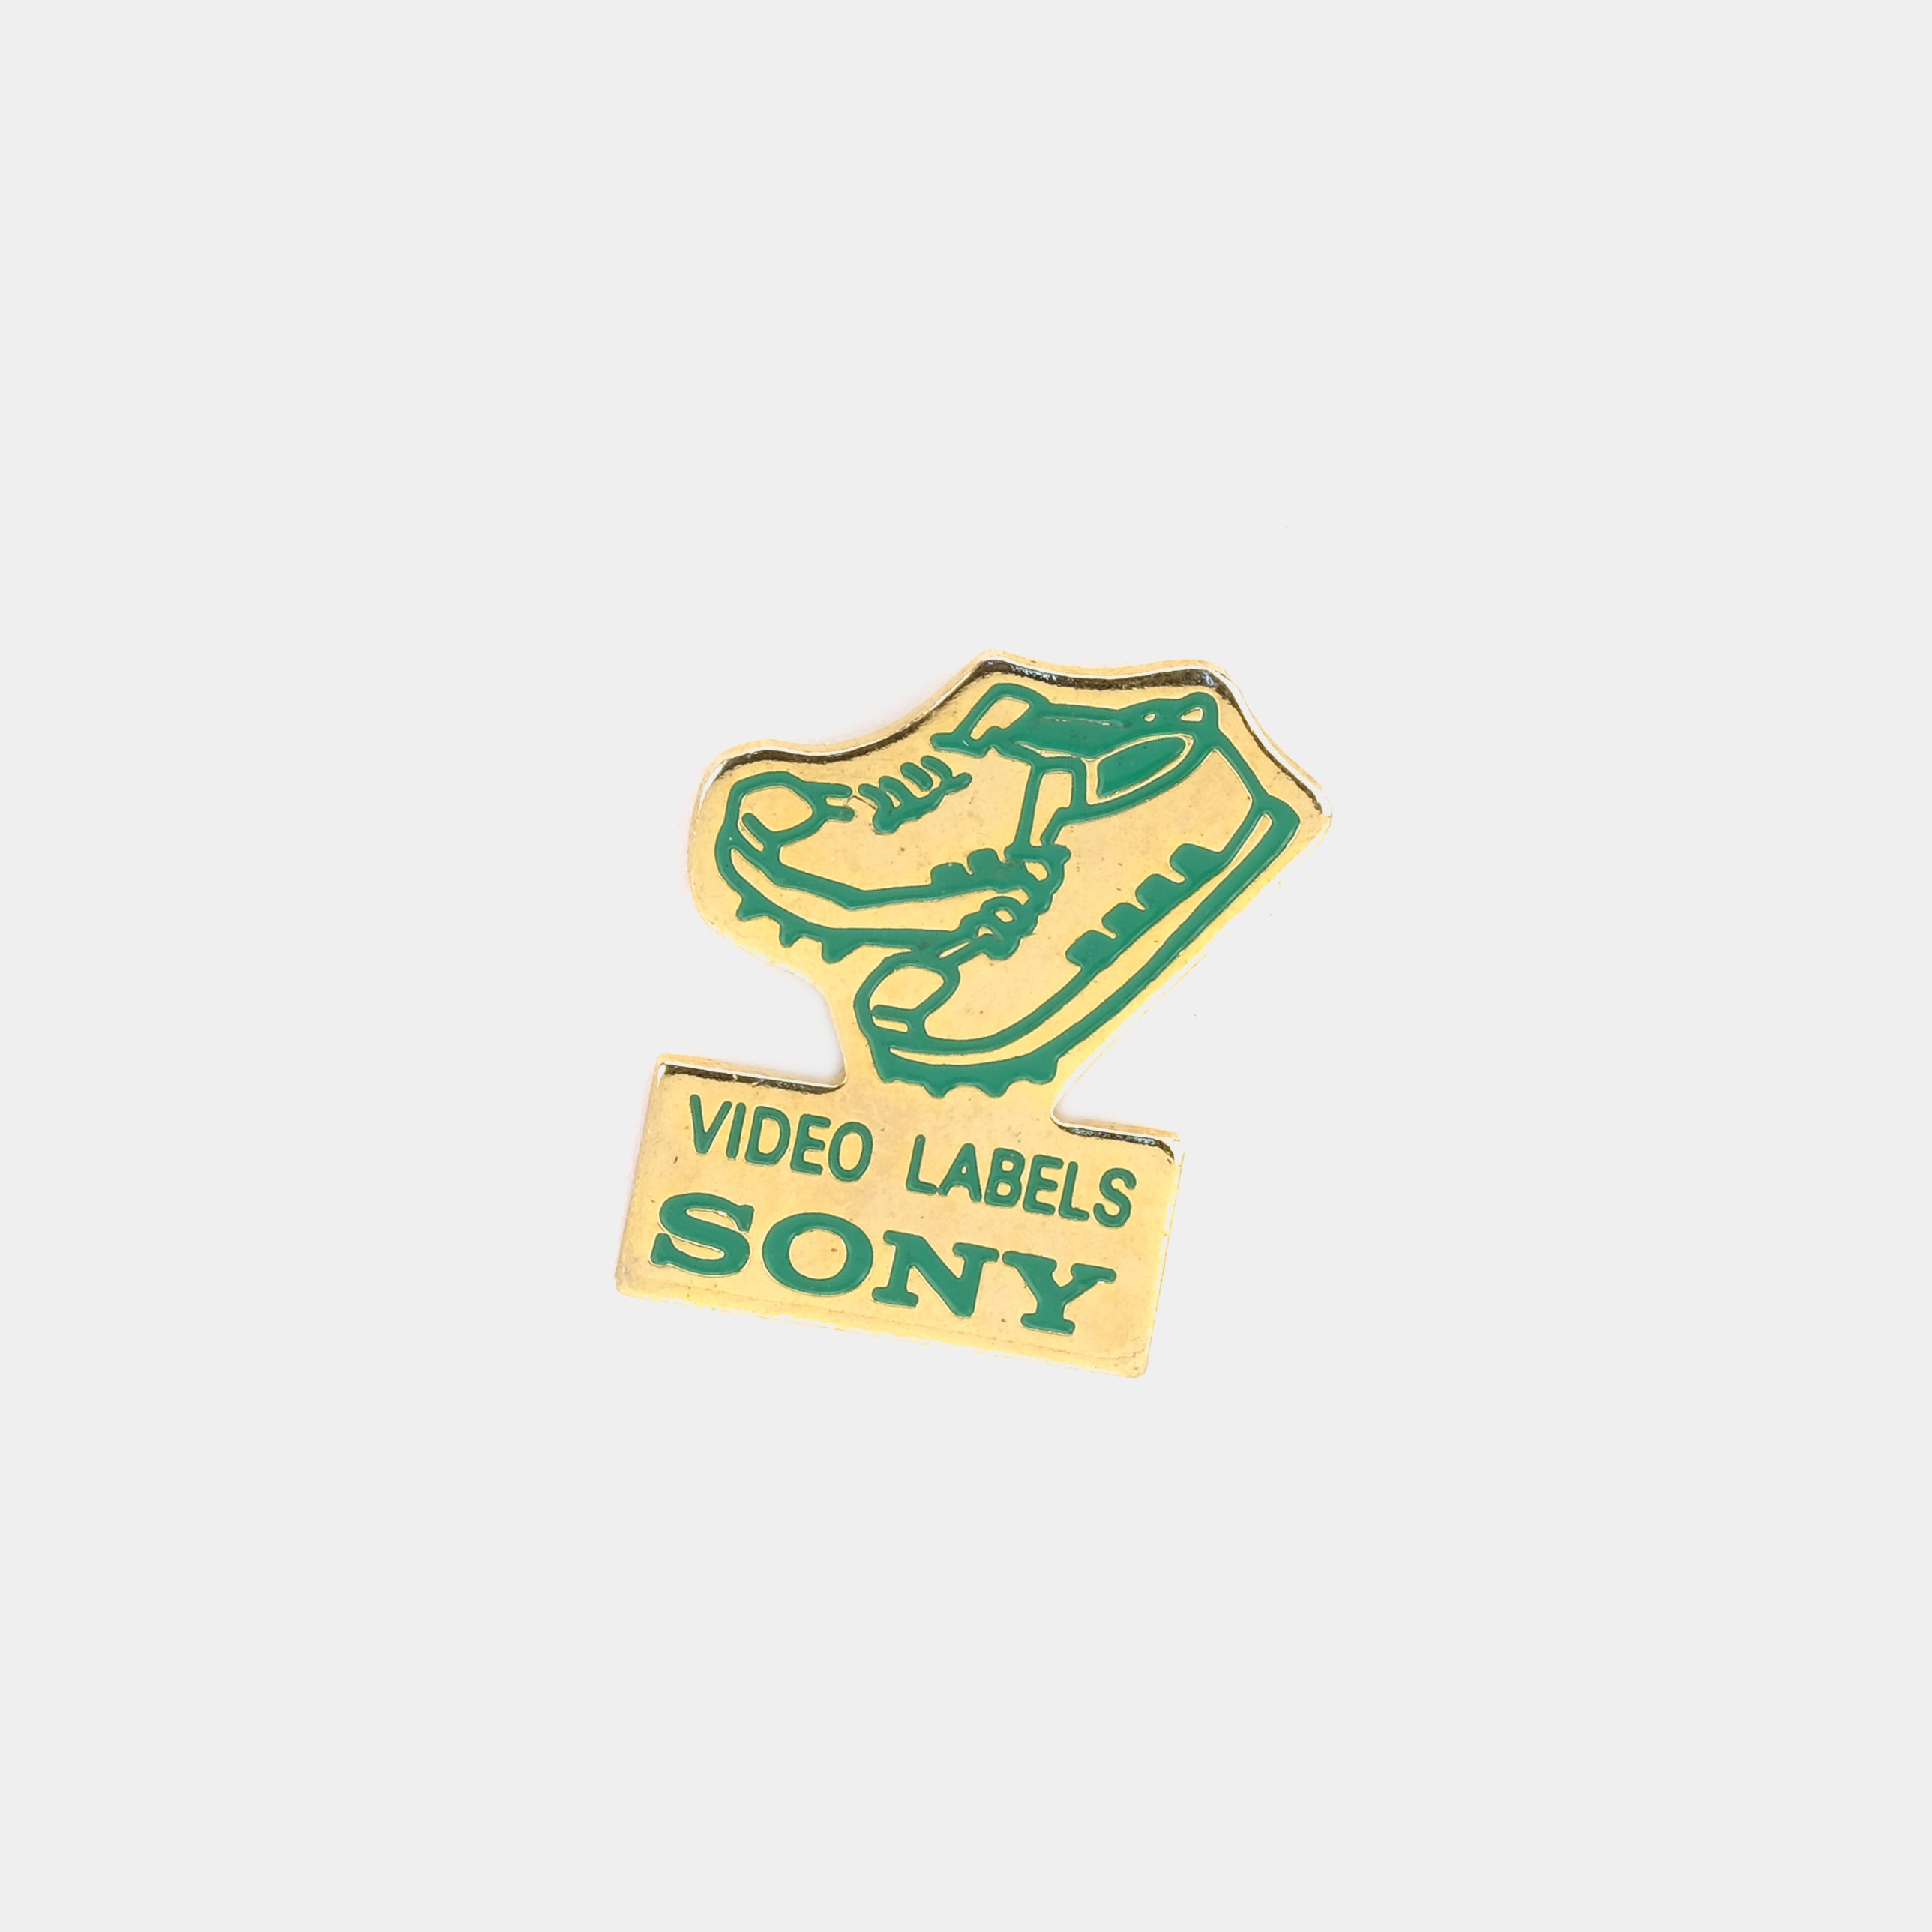 Sony Video Labels Vintage Enamel Pin